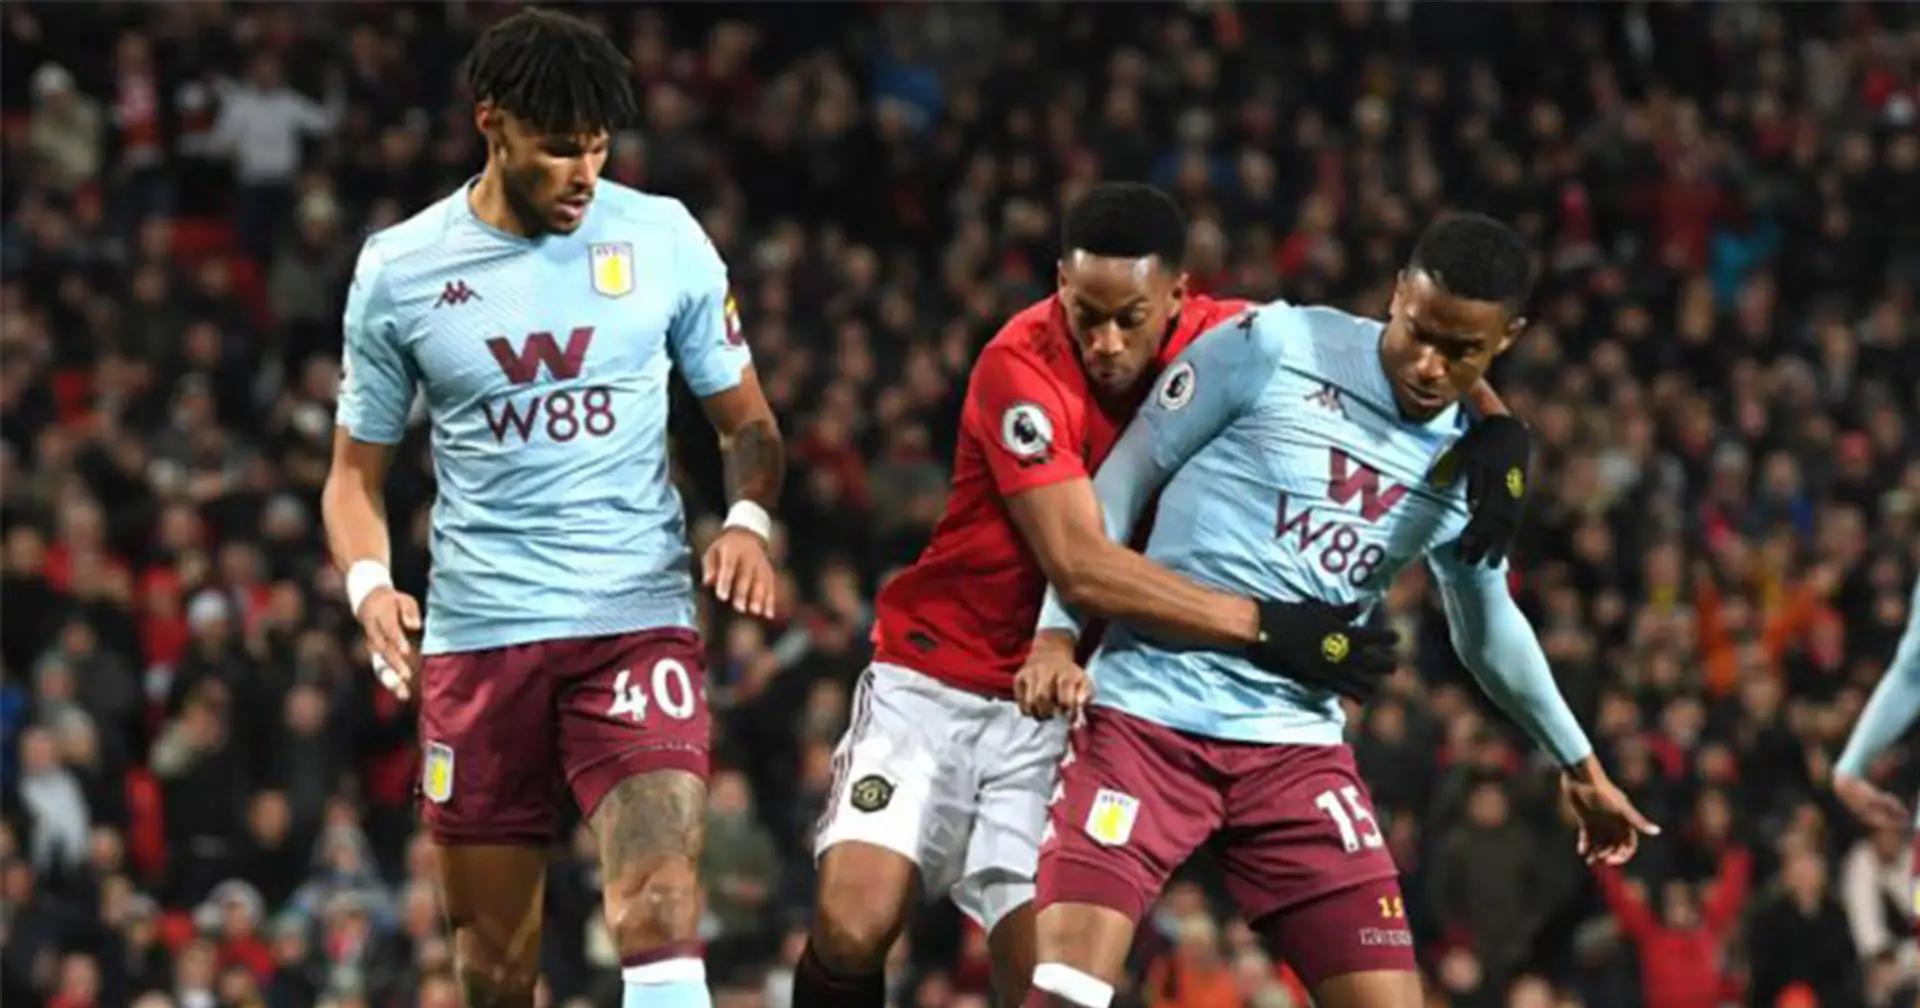 Aston Villa vs Man United: team news, probable line-ups, score predictions and more – preview